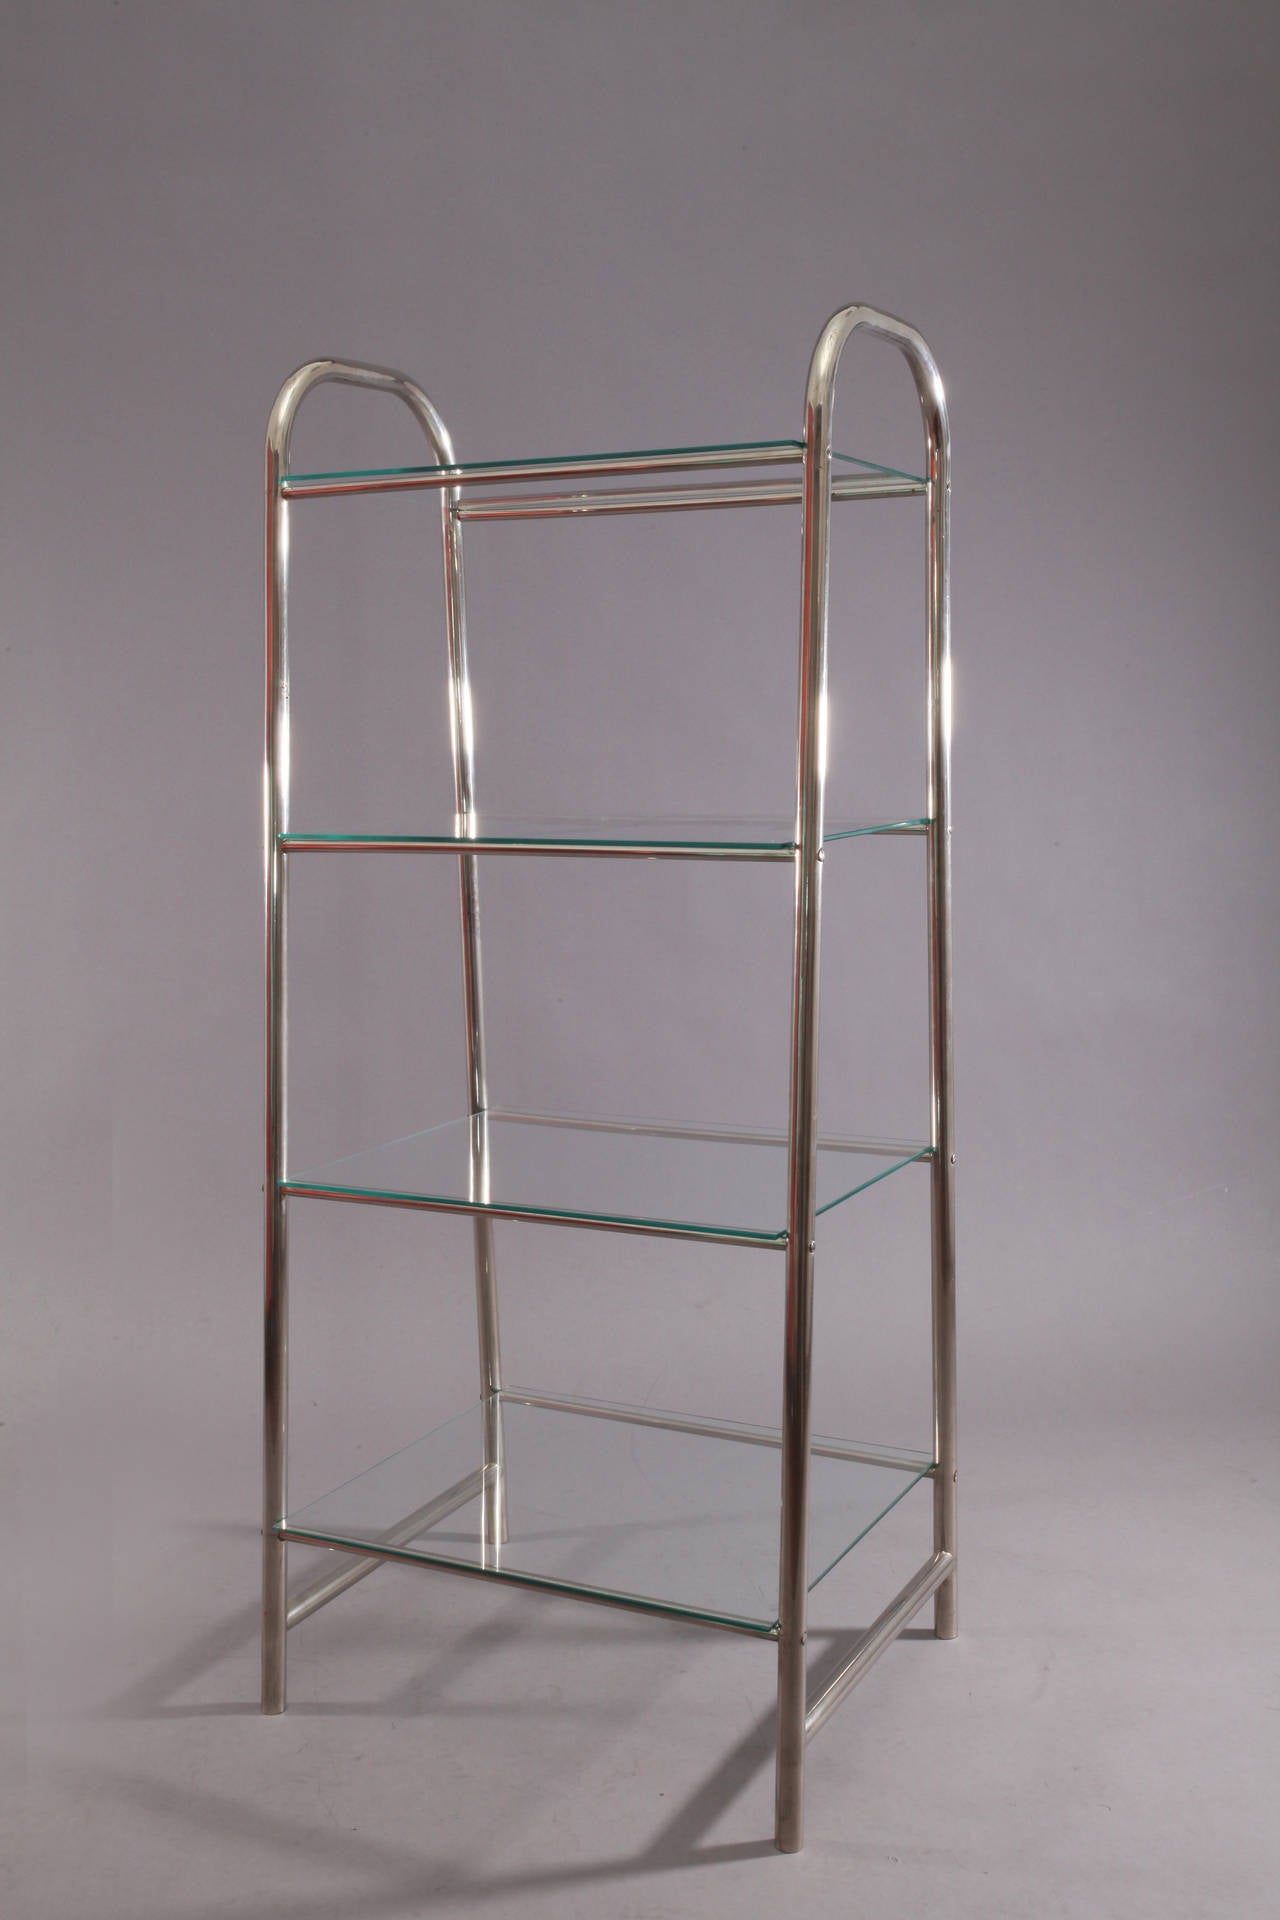 shelf etagere
Bauhaus
prod. Thonet 1940
4 glas shelves
depht 20